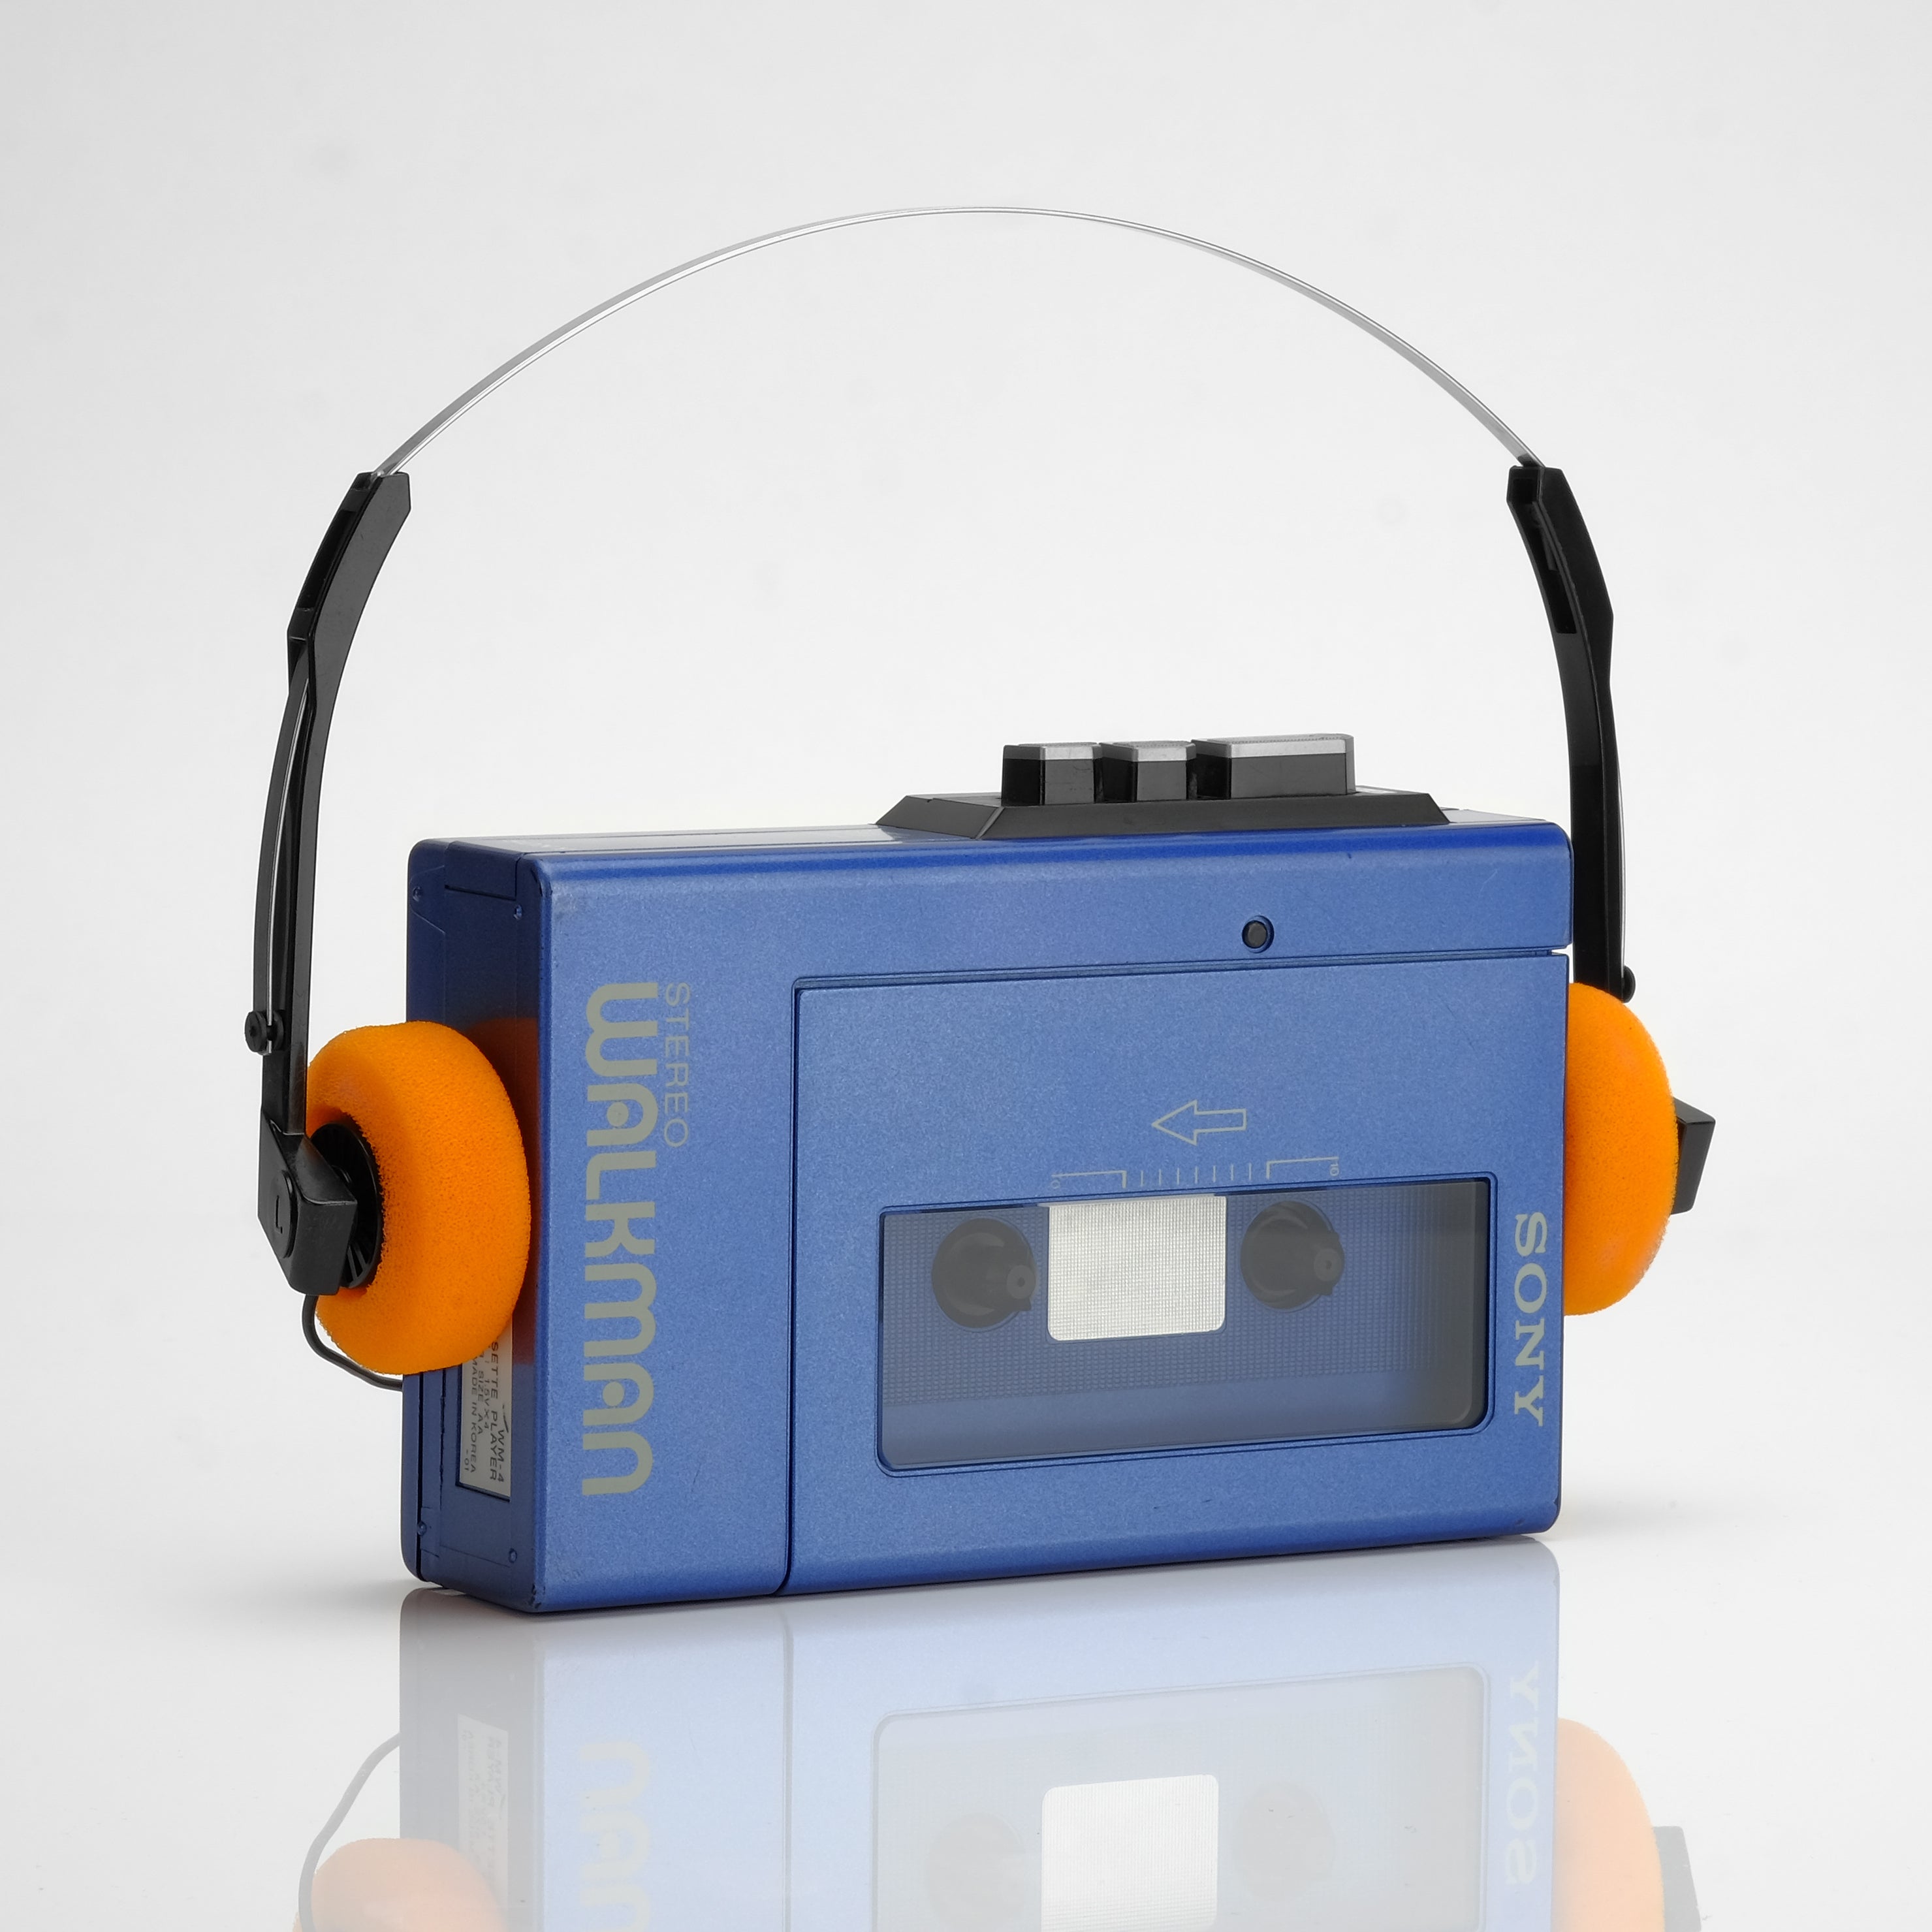 Sony Walkman WM-4 Portable Cassette Player